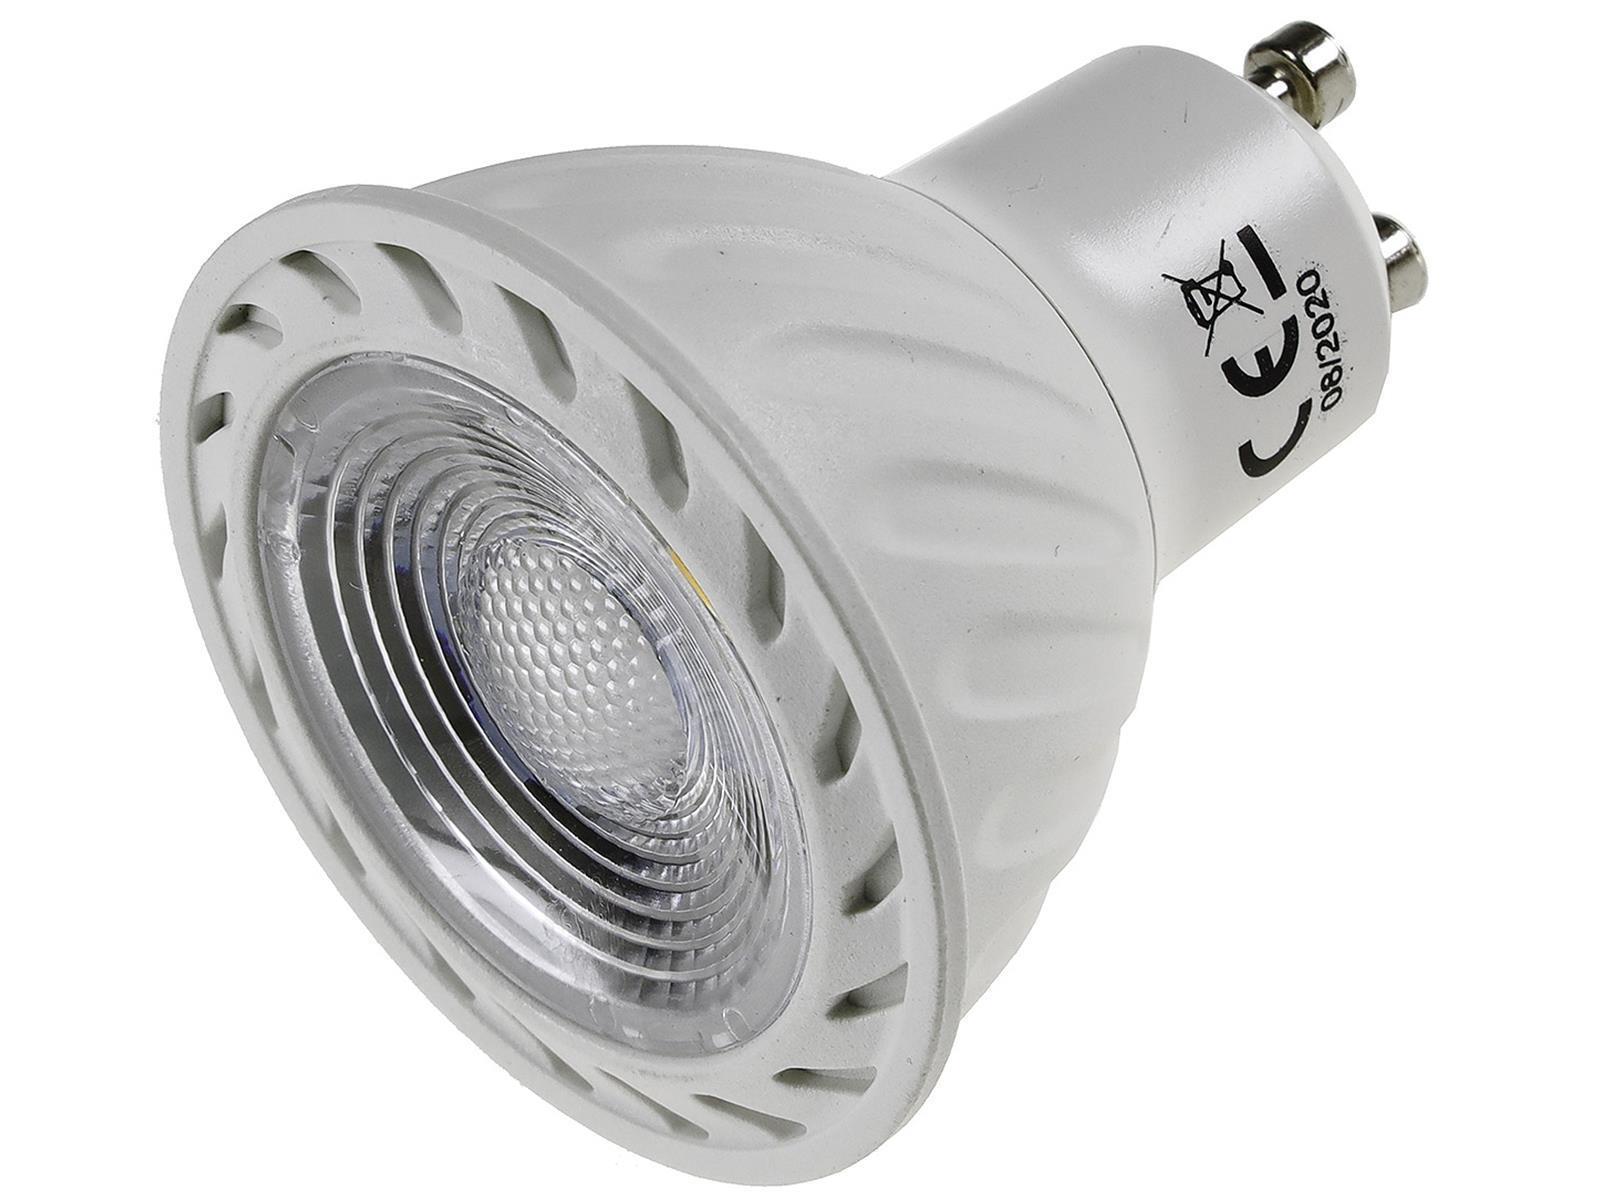 LED Strahler GU10 "H60 COB Dimmbar"3000k, 510lm, 230V/7W, warmweiß